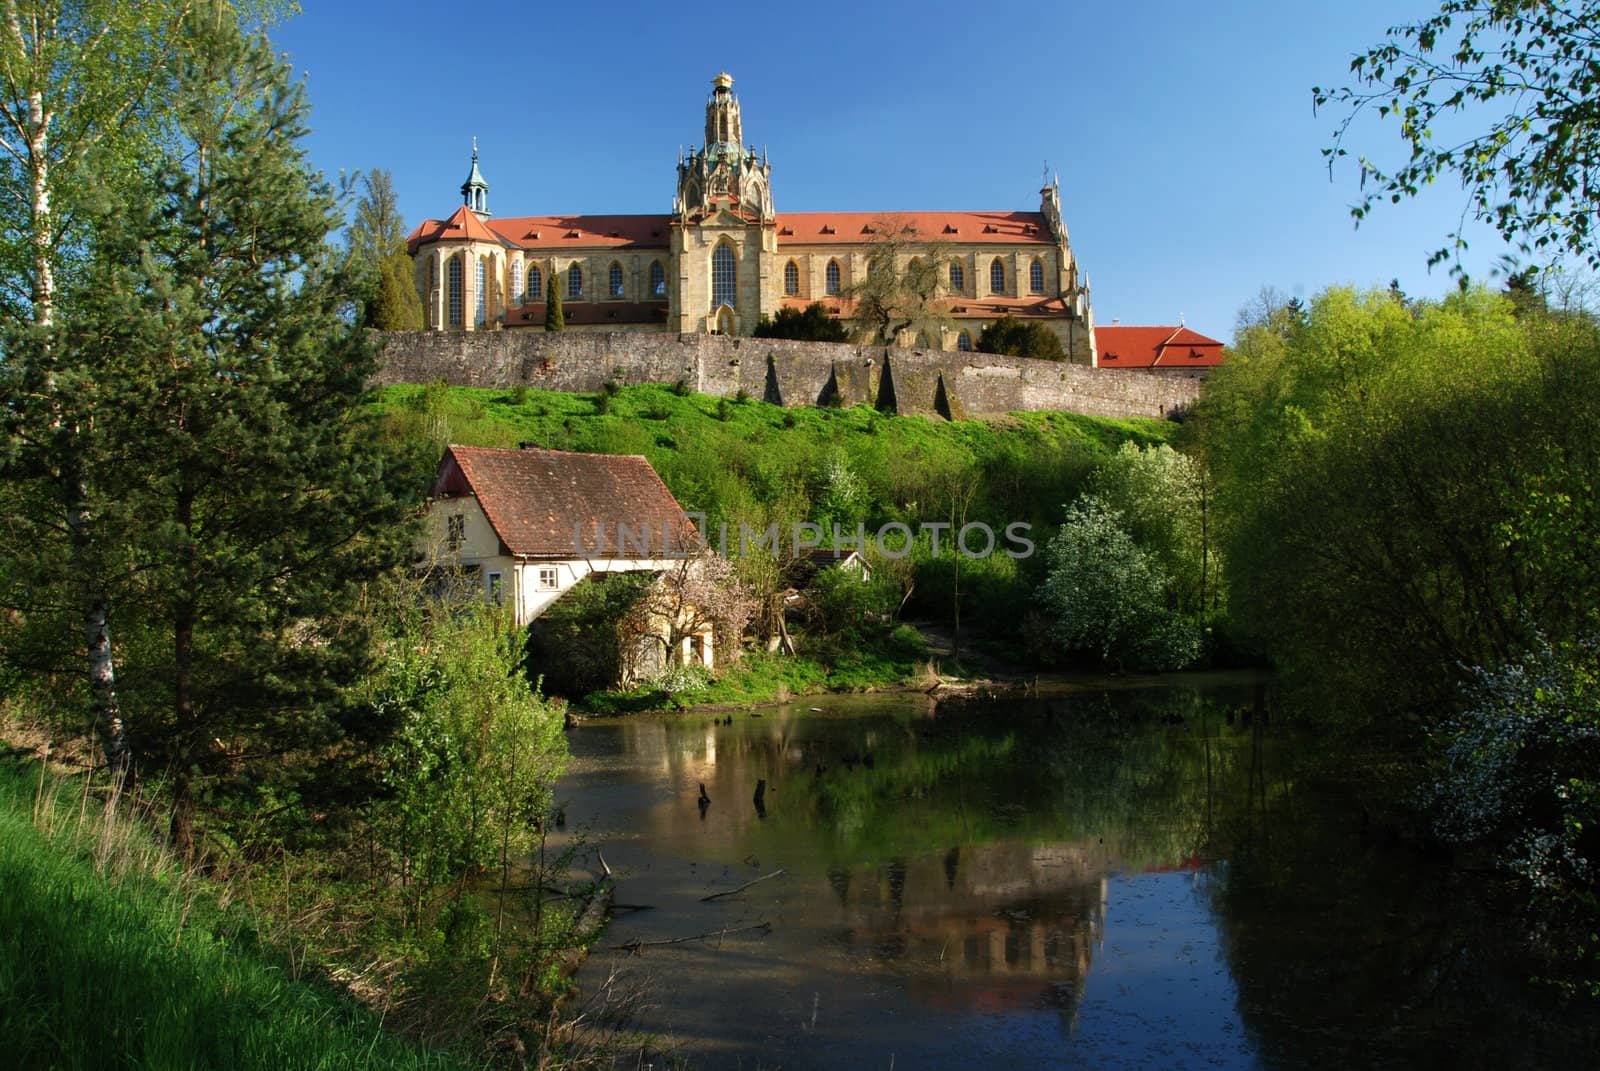 Czech baroque monastery in Kladruby nad Vltavou